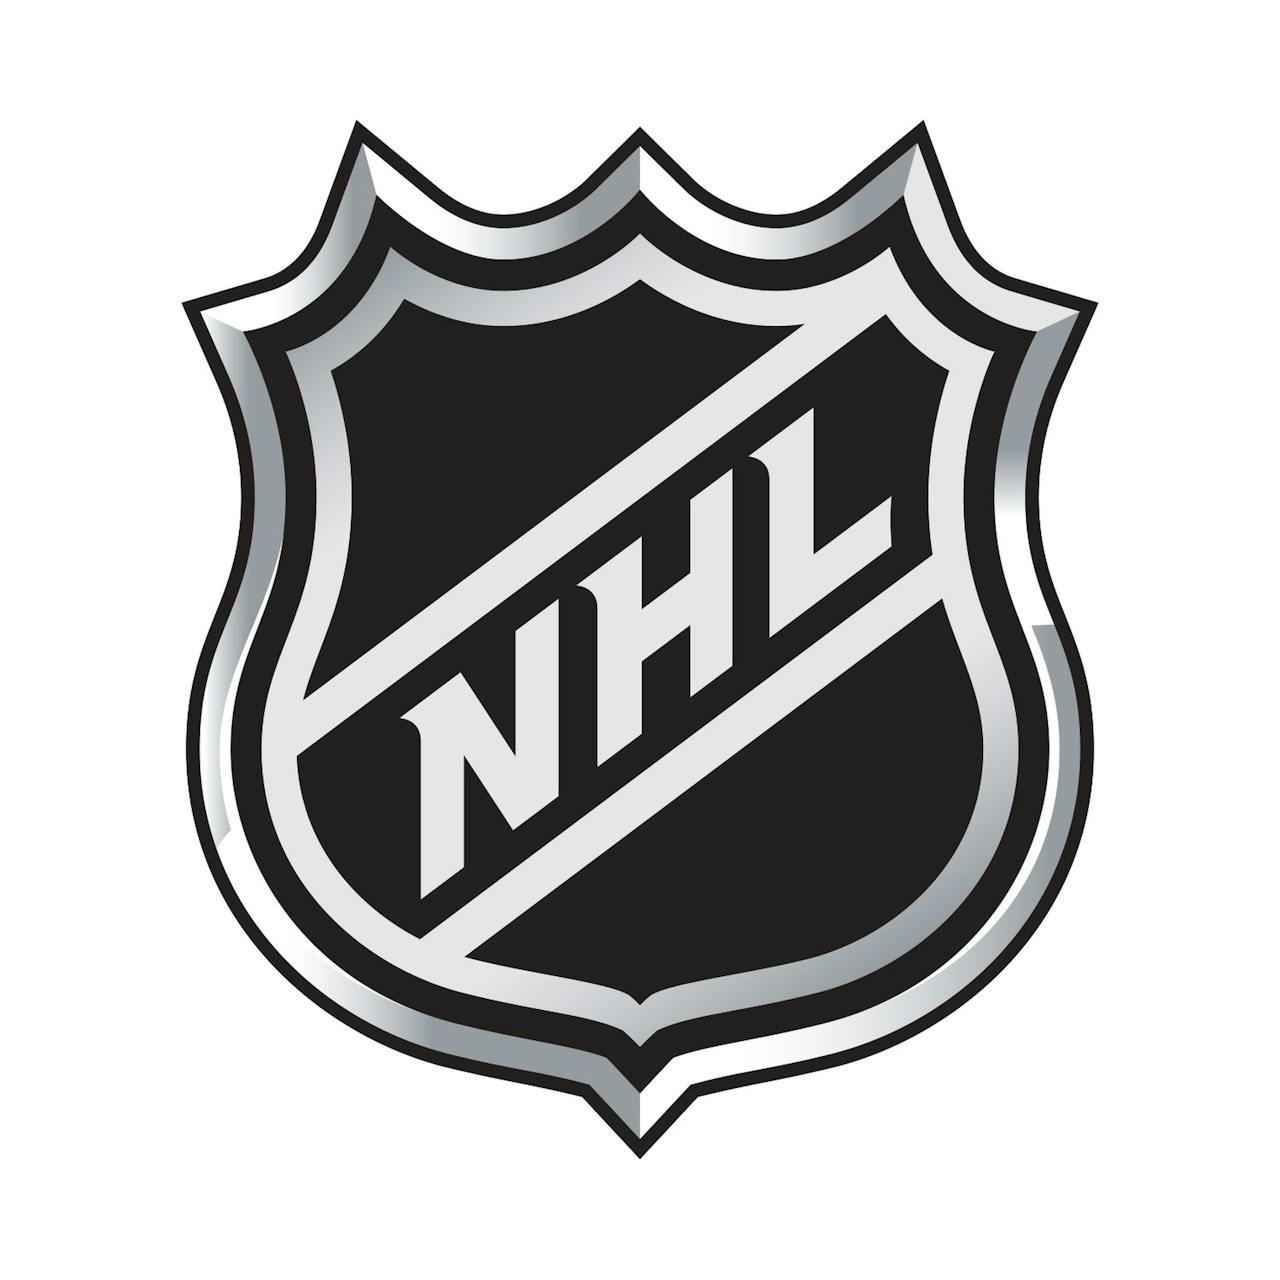 (C) NHL/PULS 24